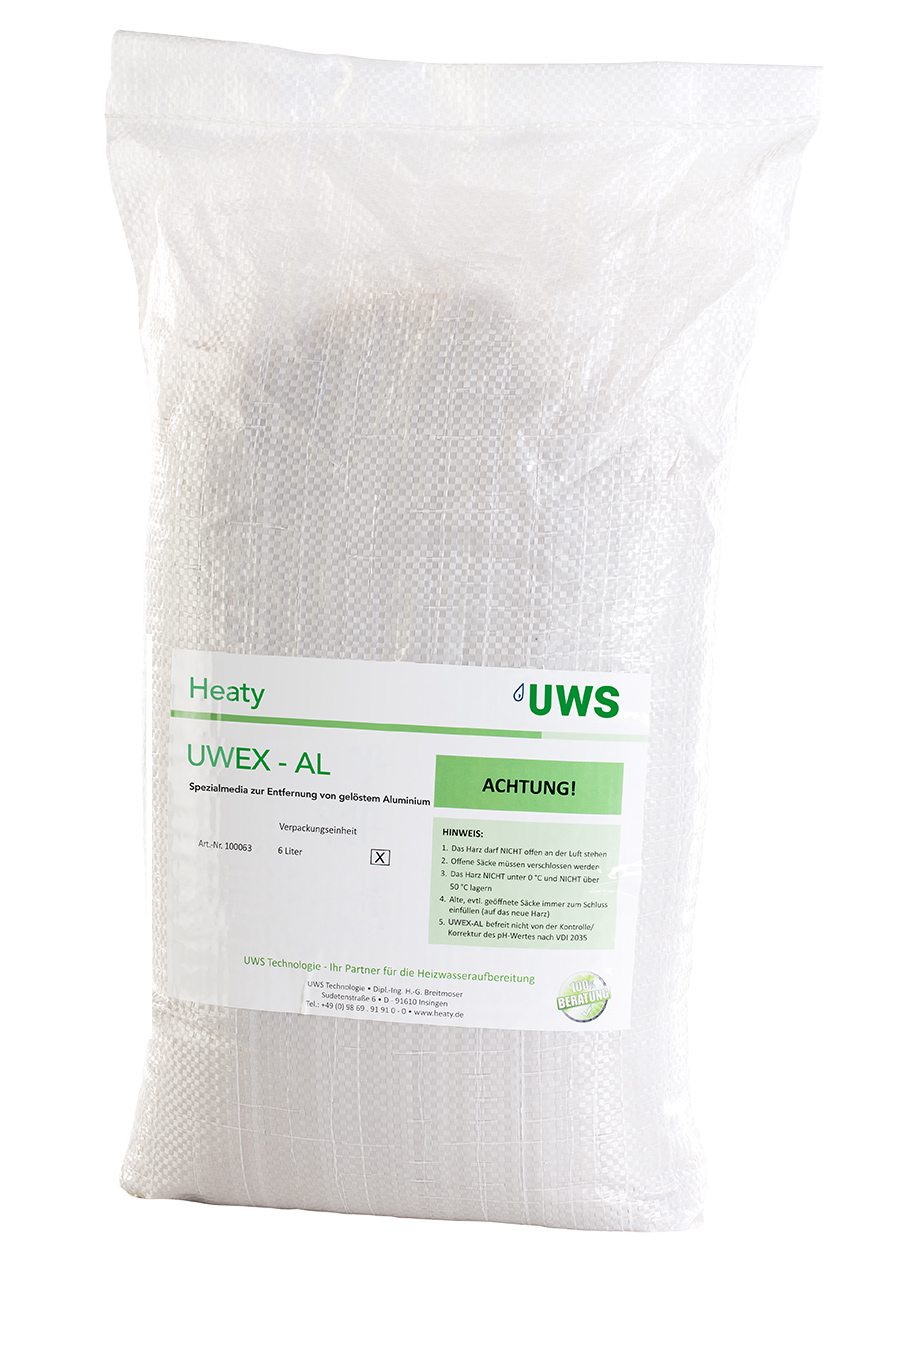 UWS Heaty UWEX-AL Spezialmedia zur Entfernung von gelöstem Aluminium, 6l